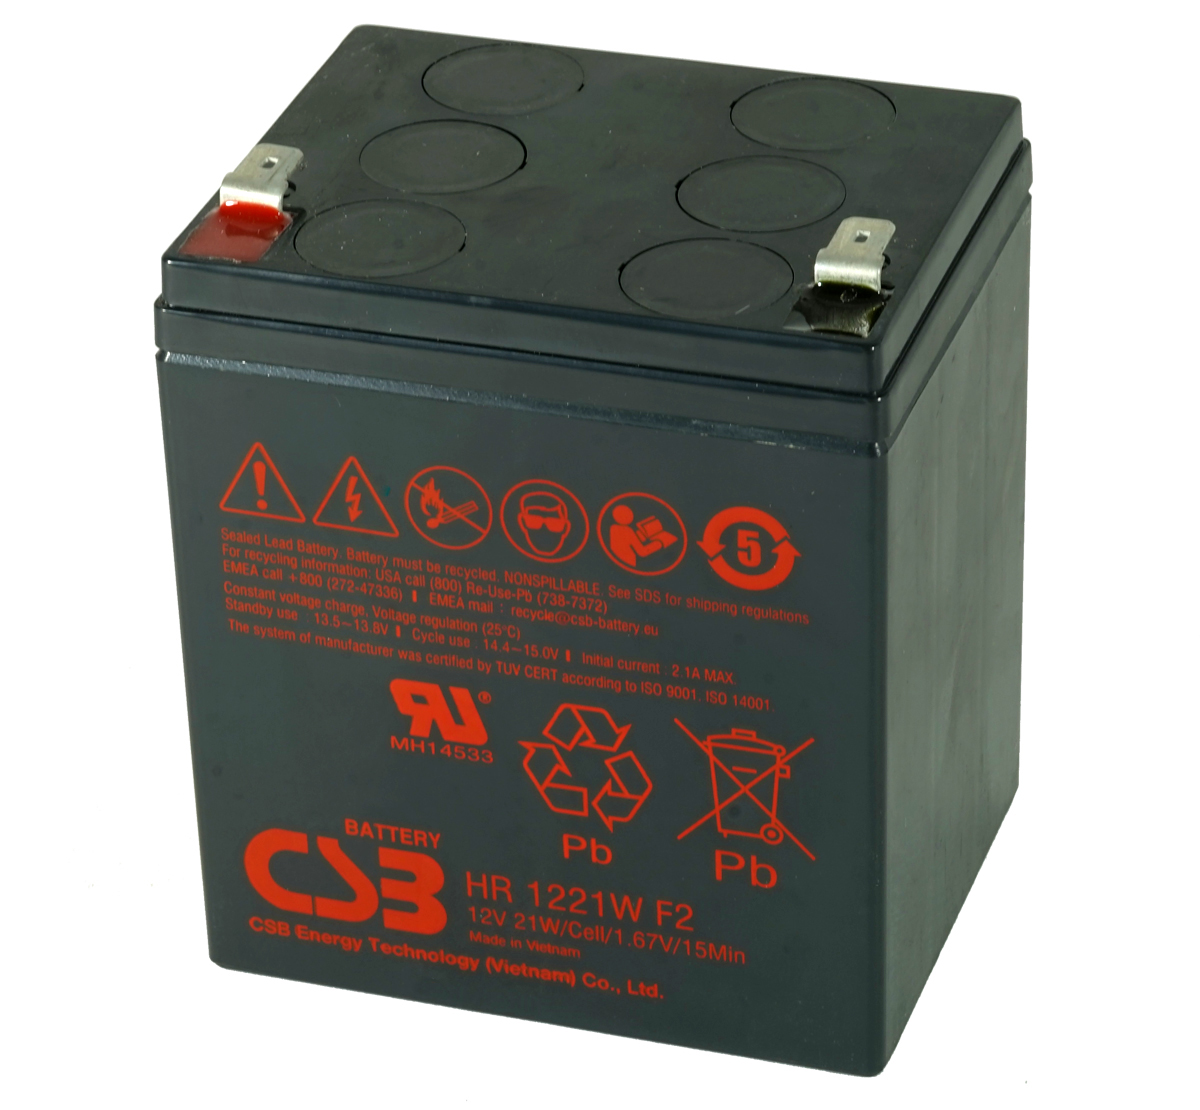 MDS46 UPS Battery Kit - Replaces APC RBC46